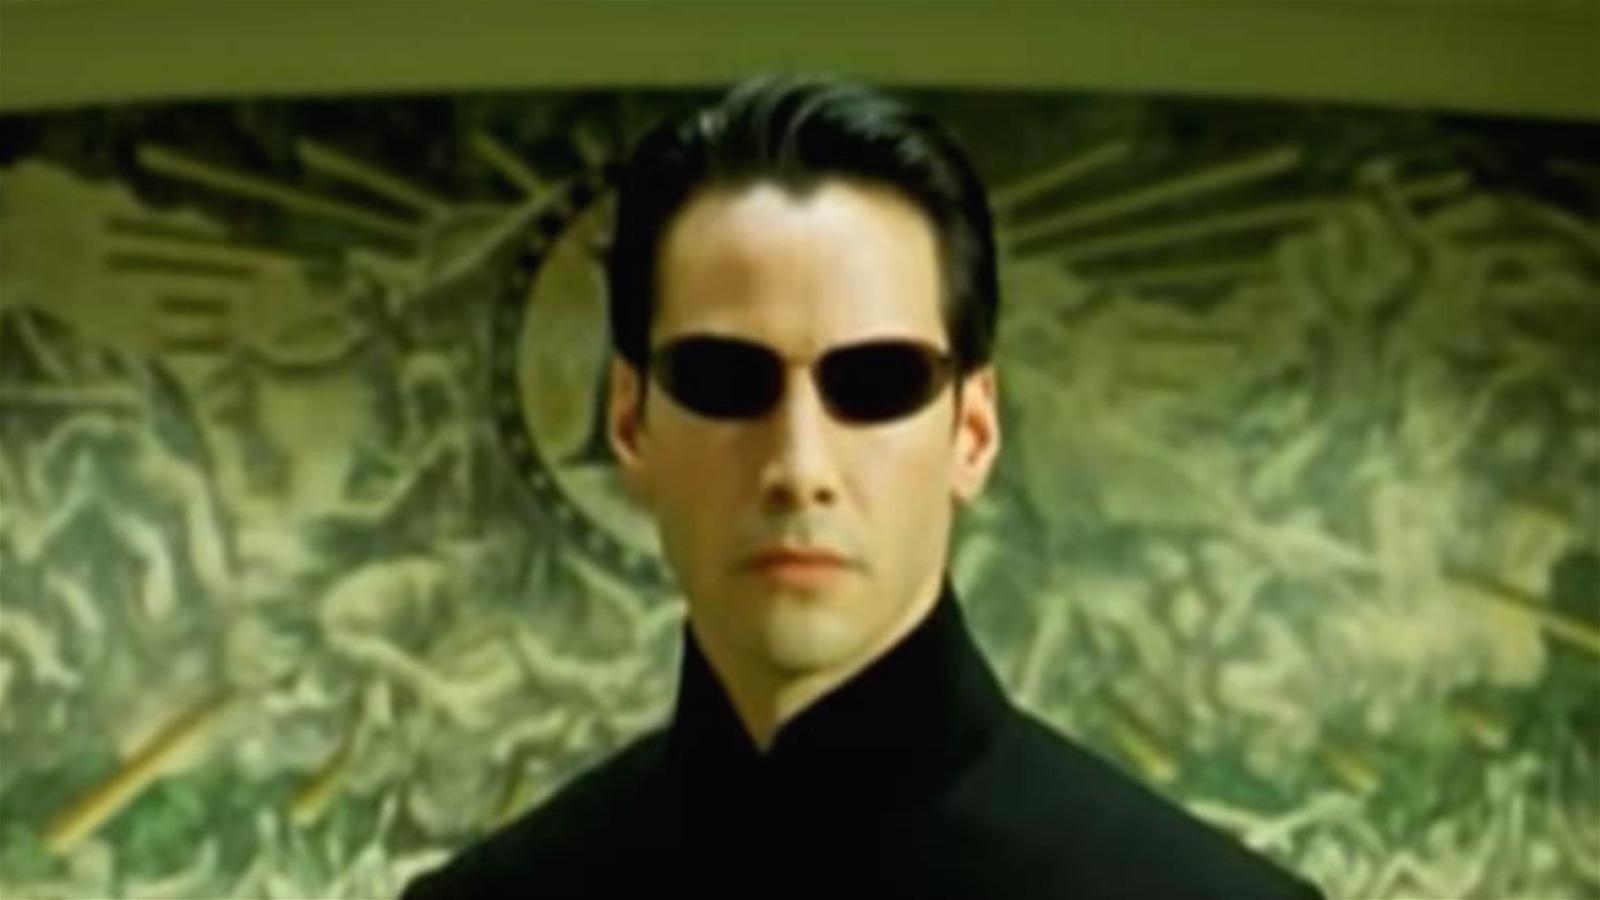 Neo vs Smith Clones [Part 1] | The Matrix Reloaded [Open Matte] - YouTube